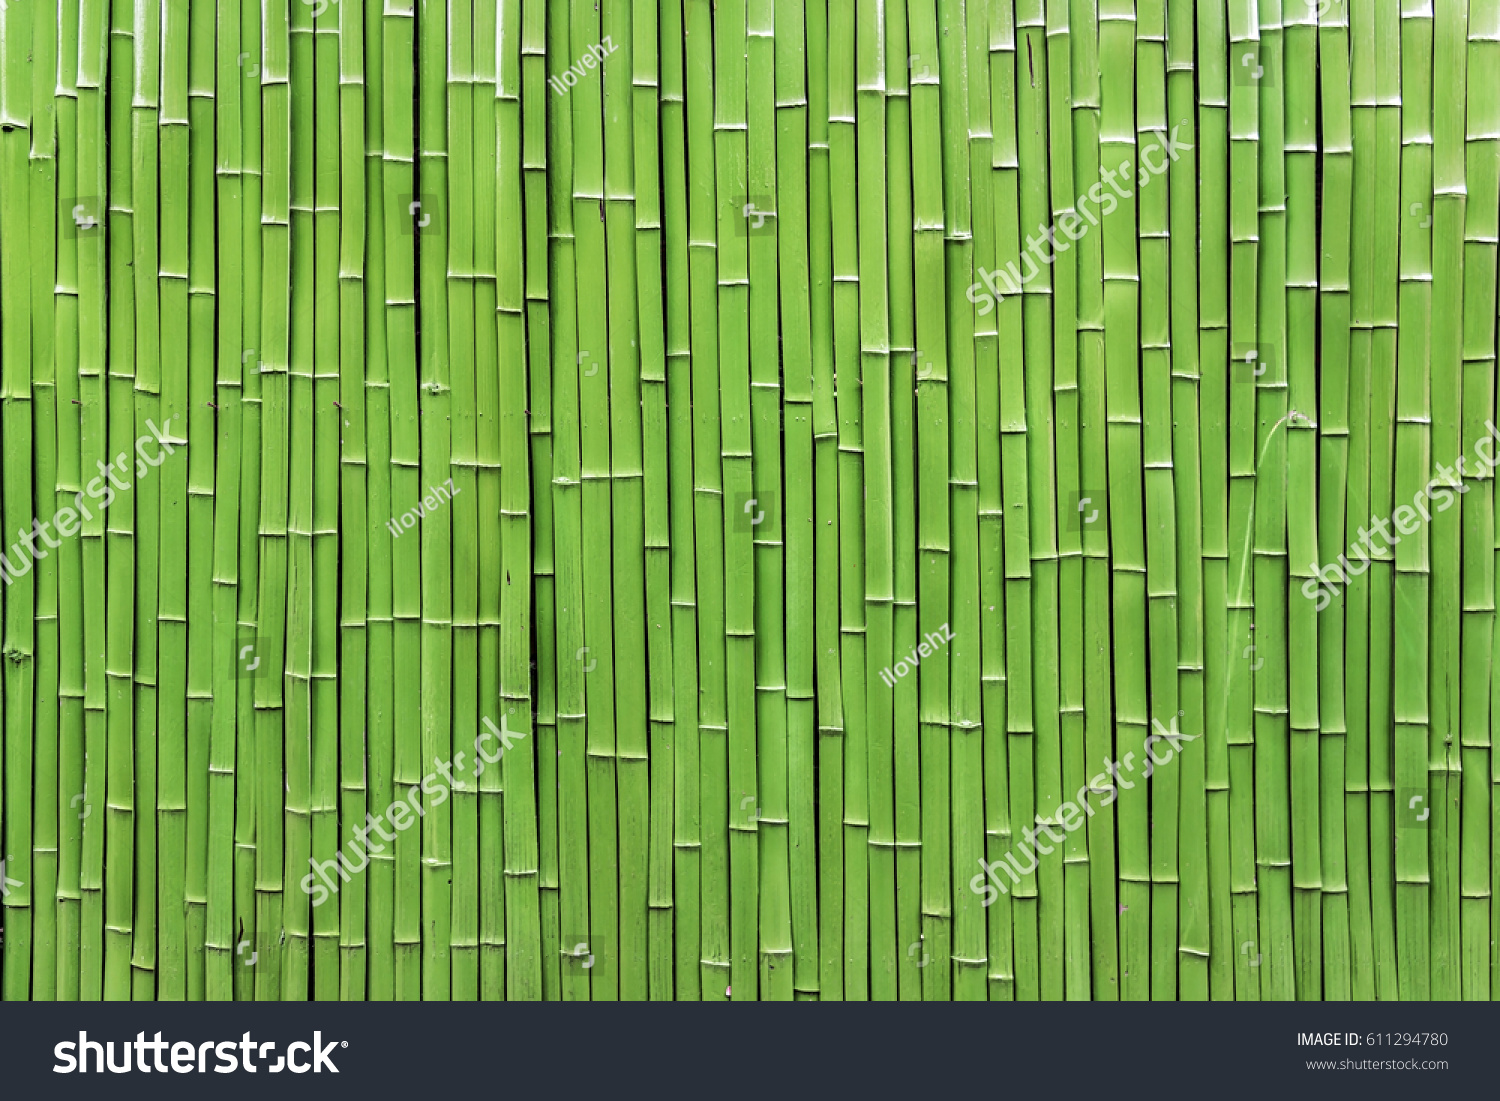 Bamboo raft #611294780